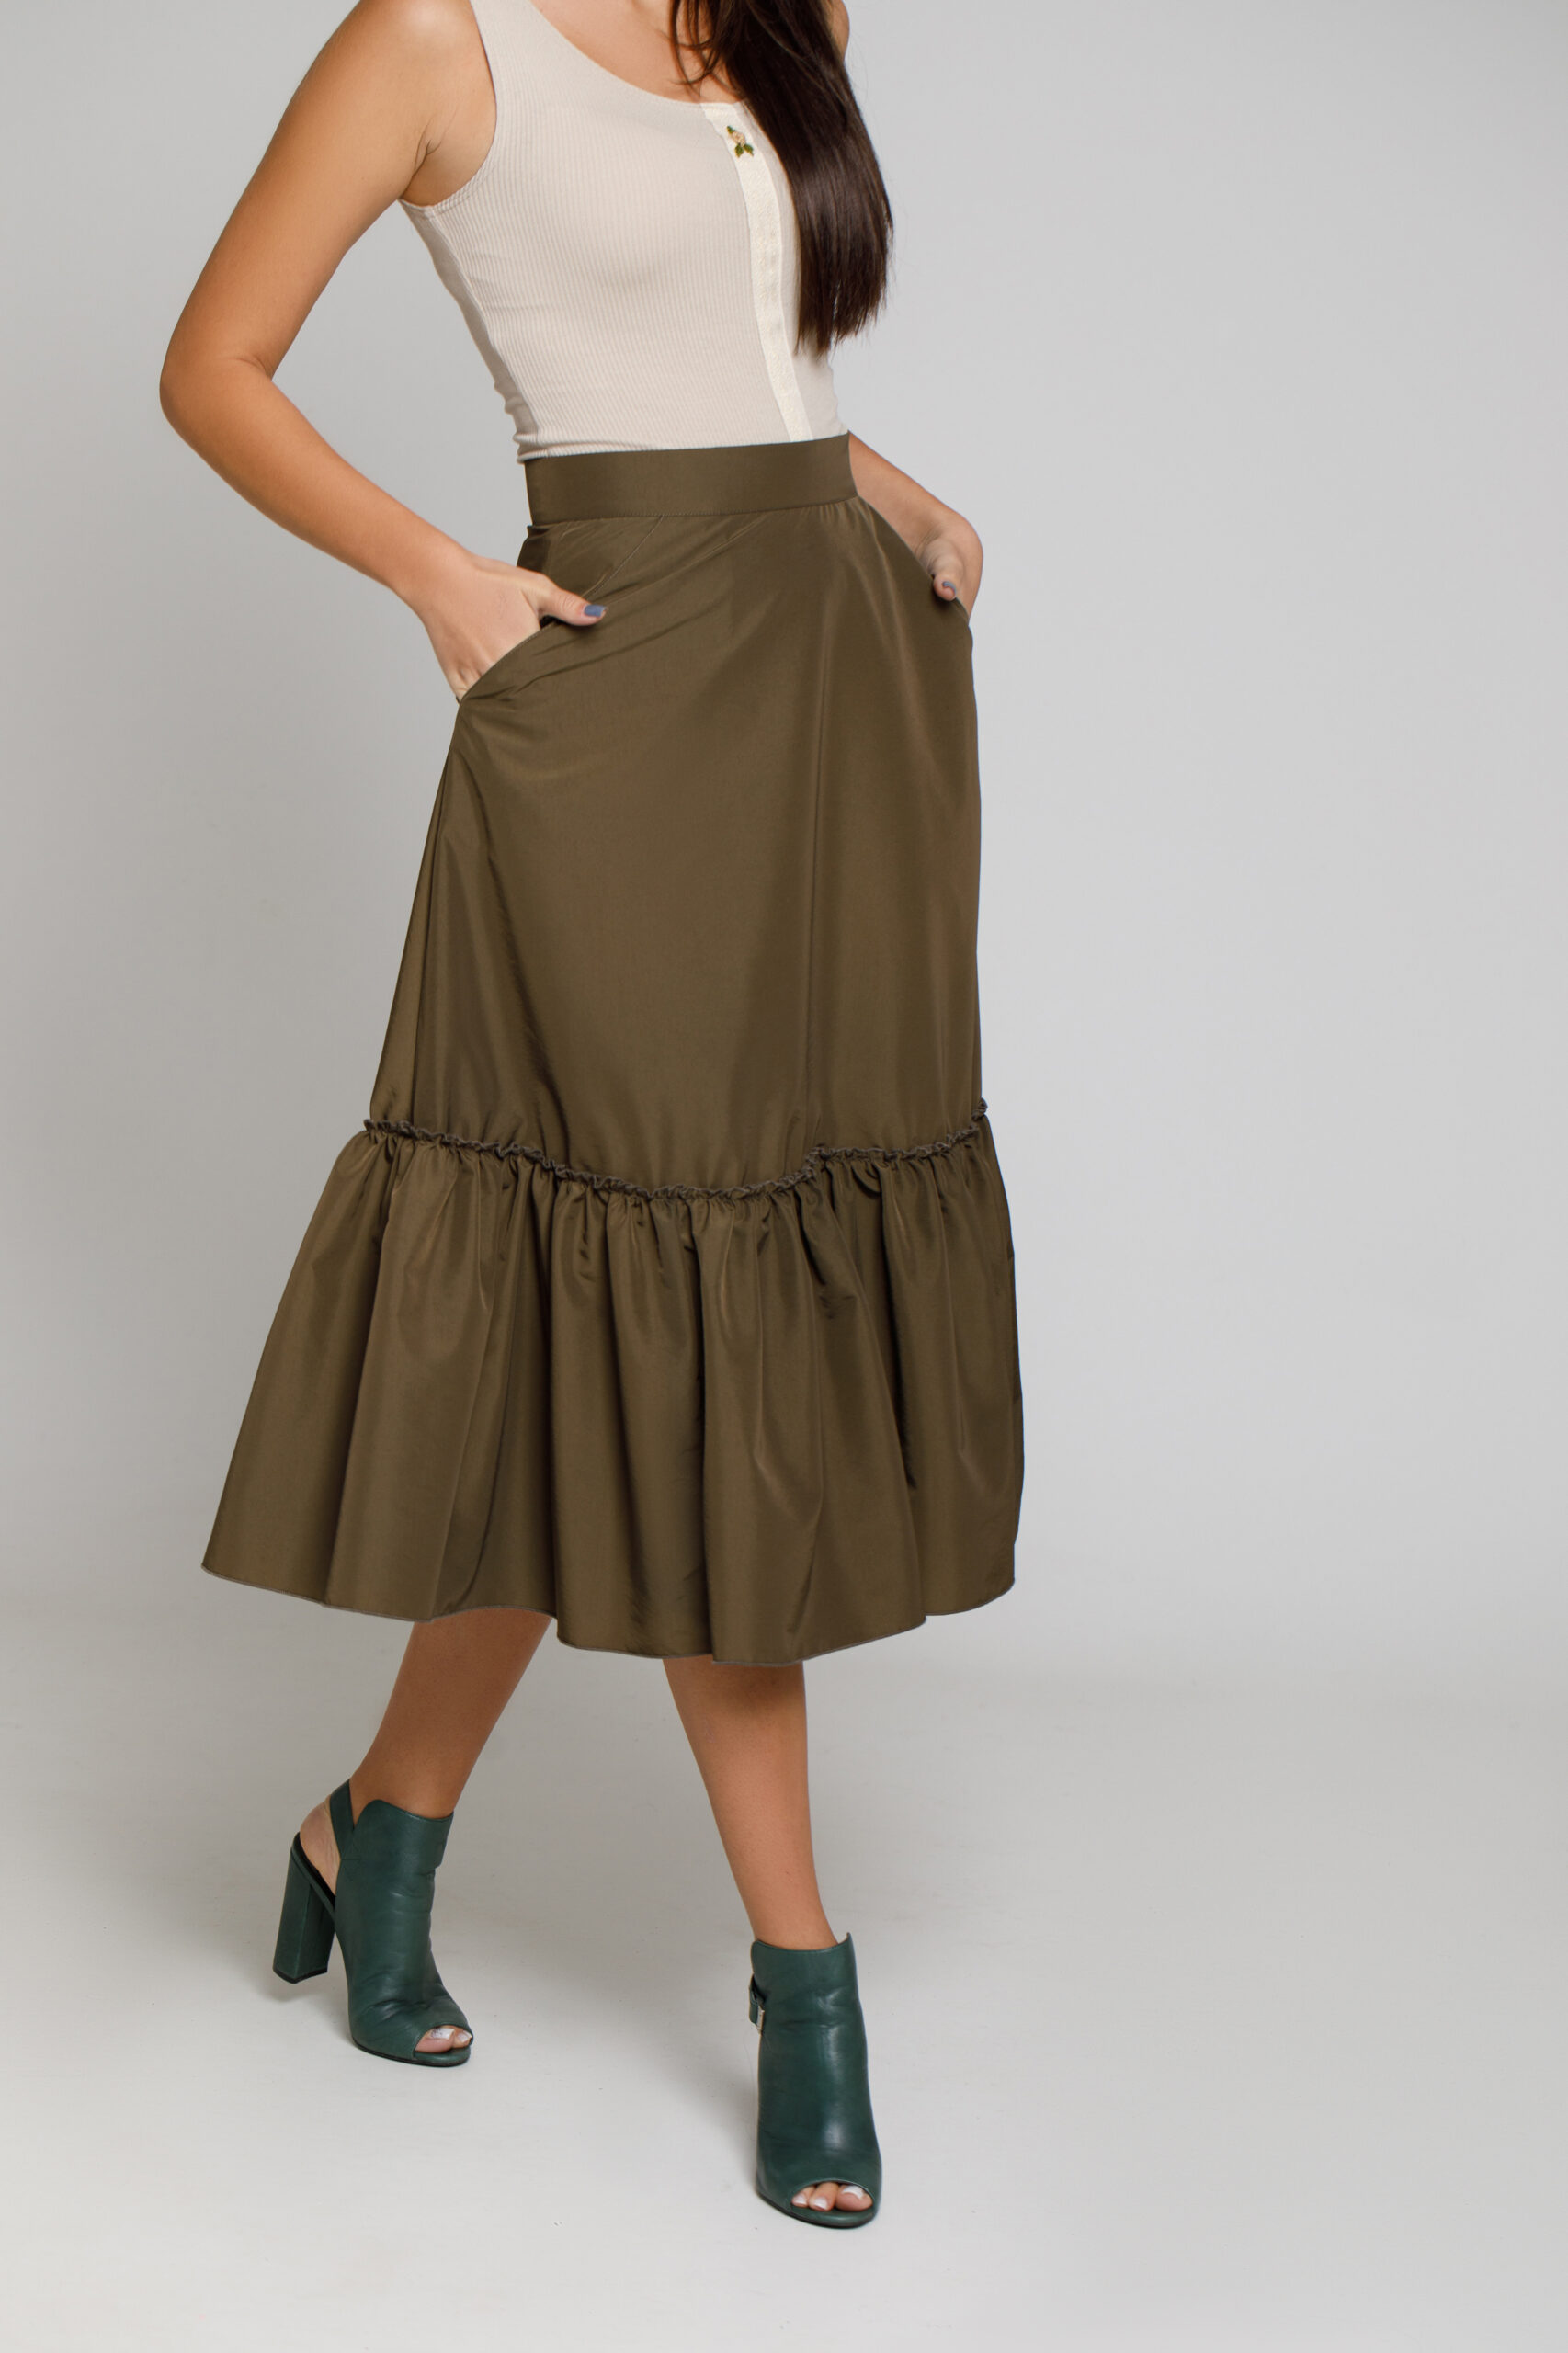 HAZEL skirt in khaki fabric with ruffles. Natural fabrics, original design, handmade embroidery